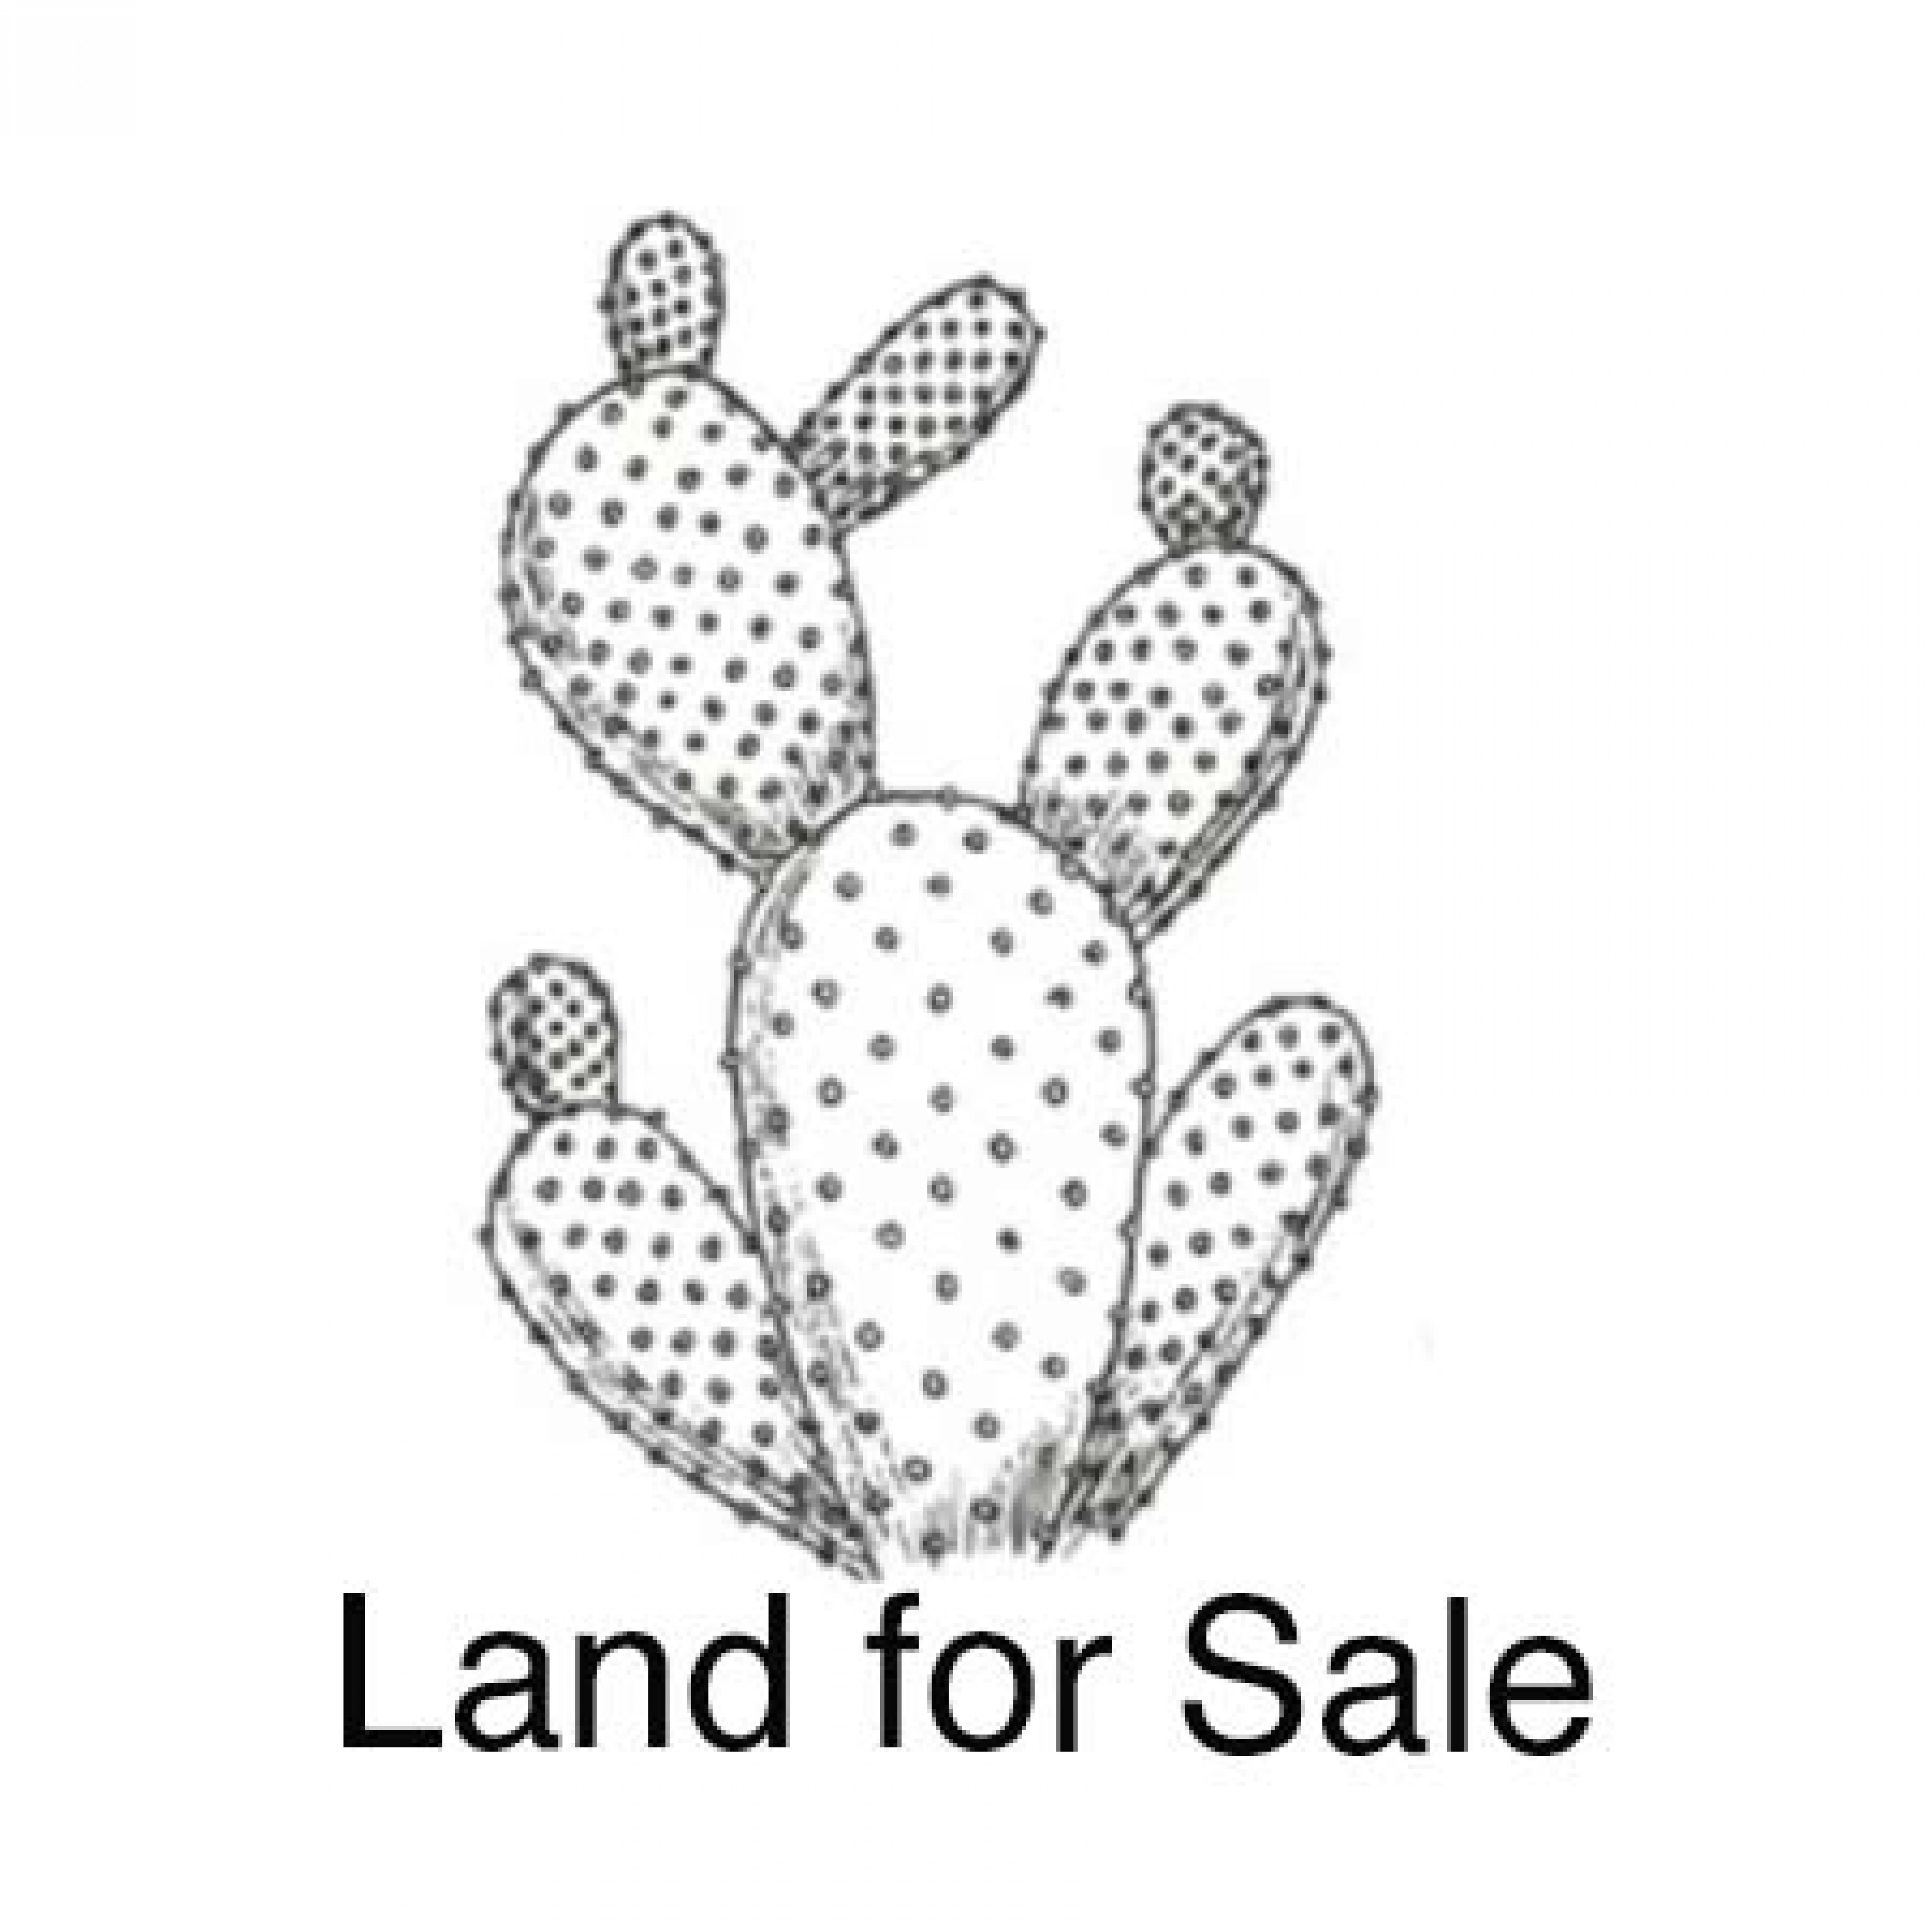 Land for sale copy